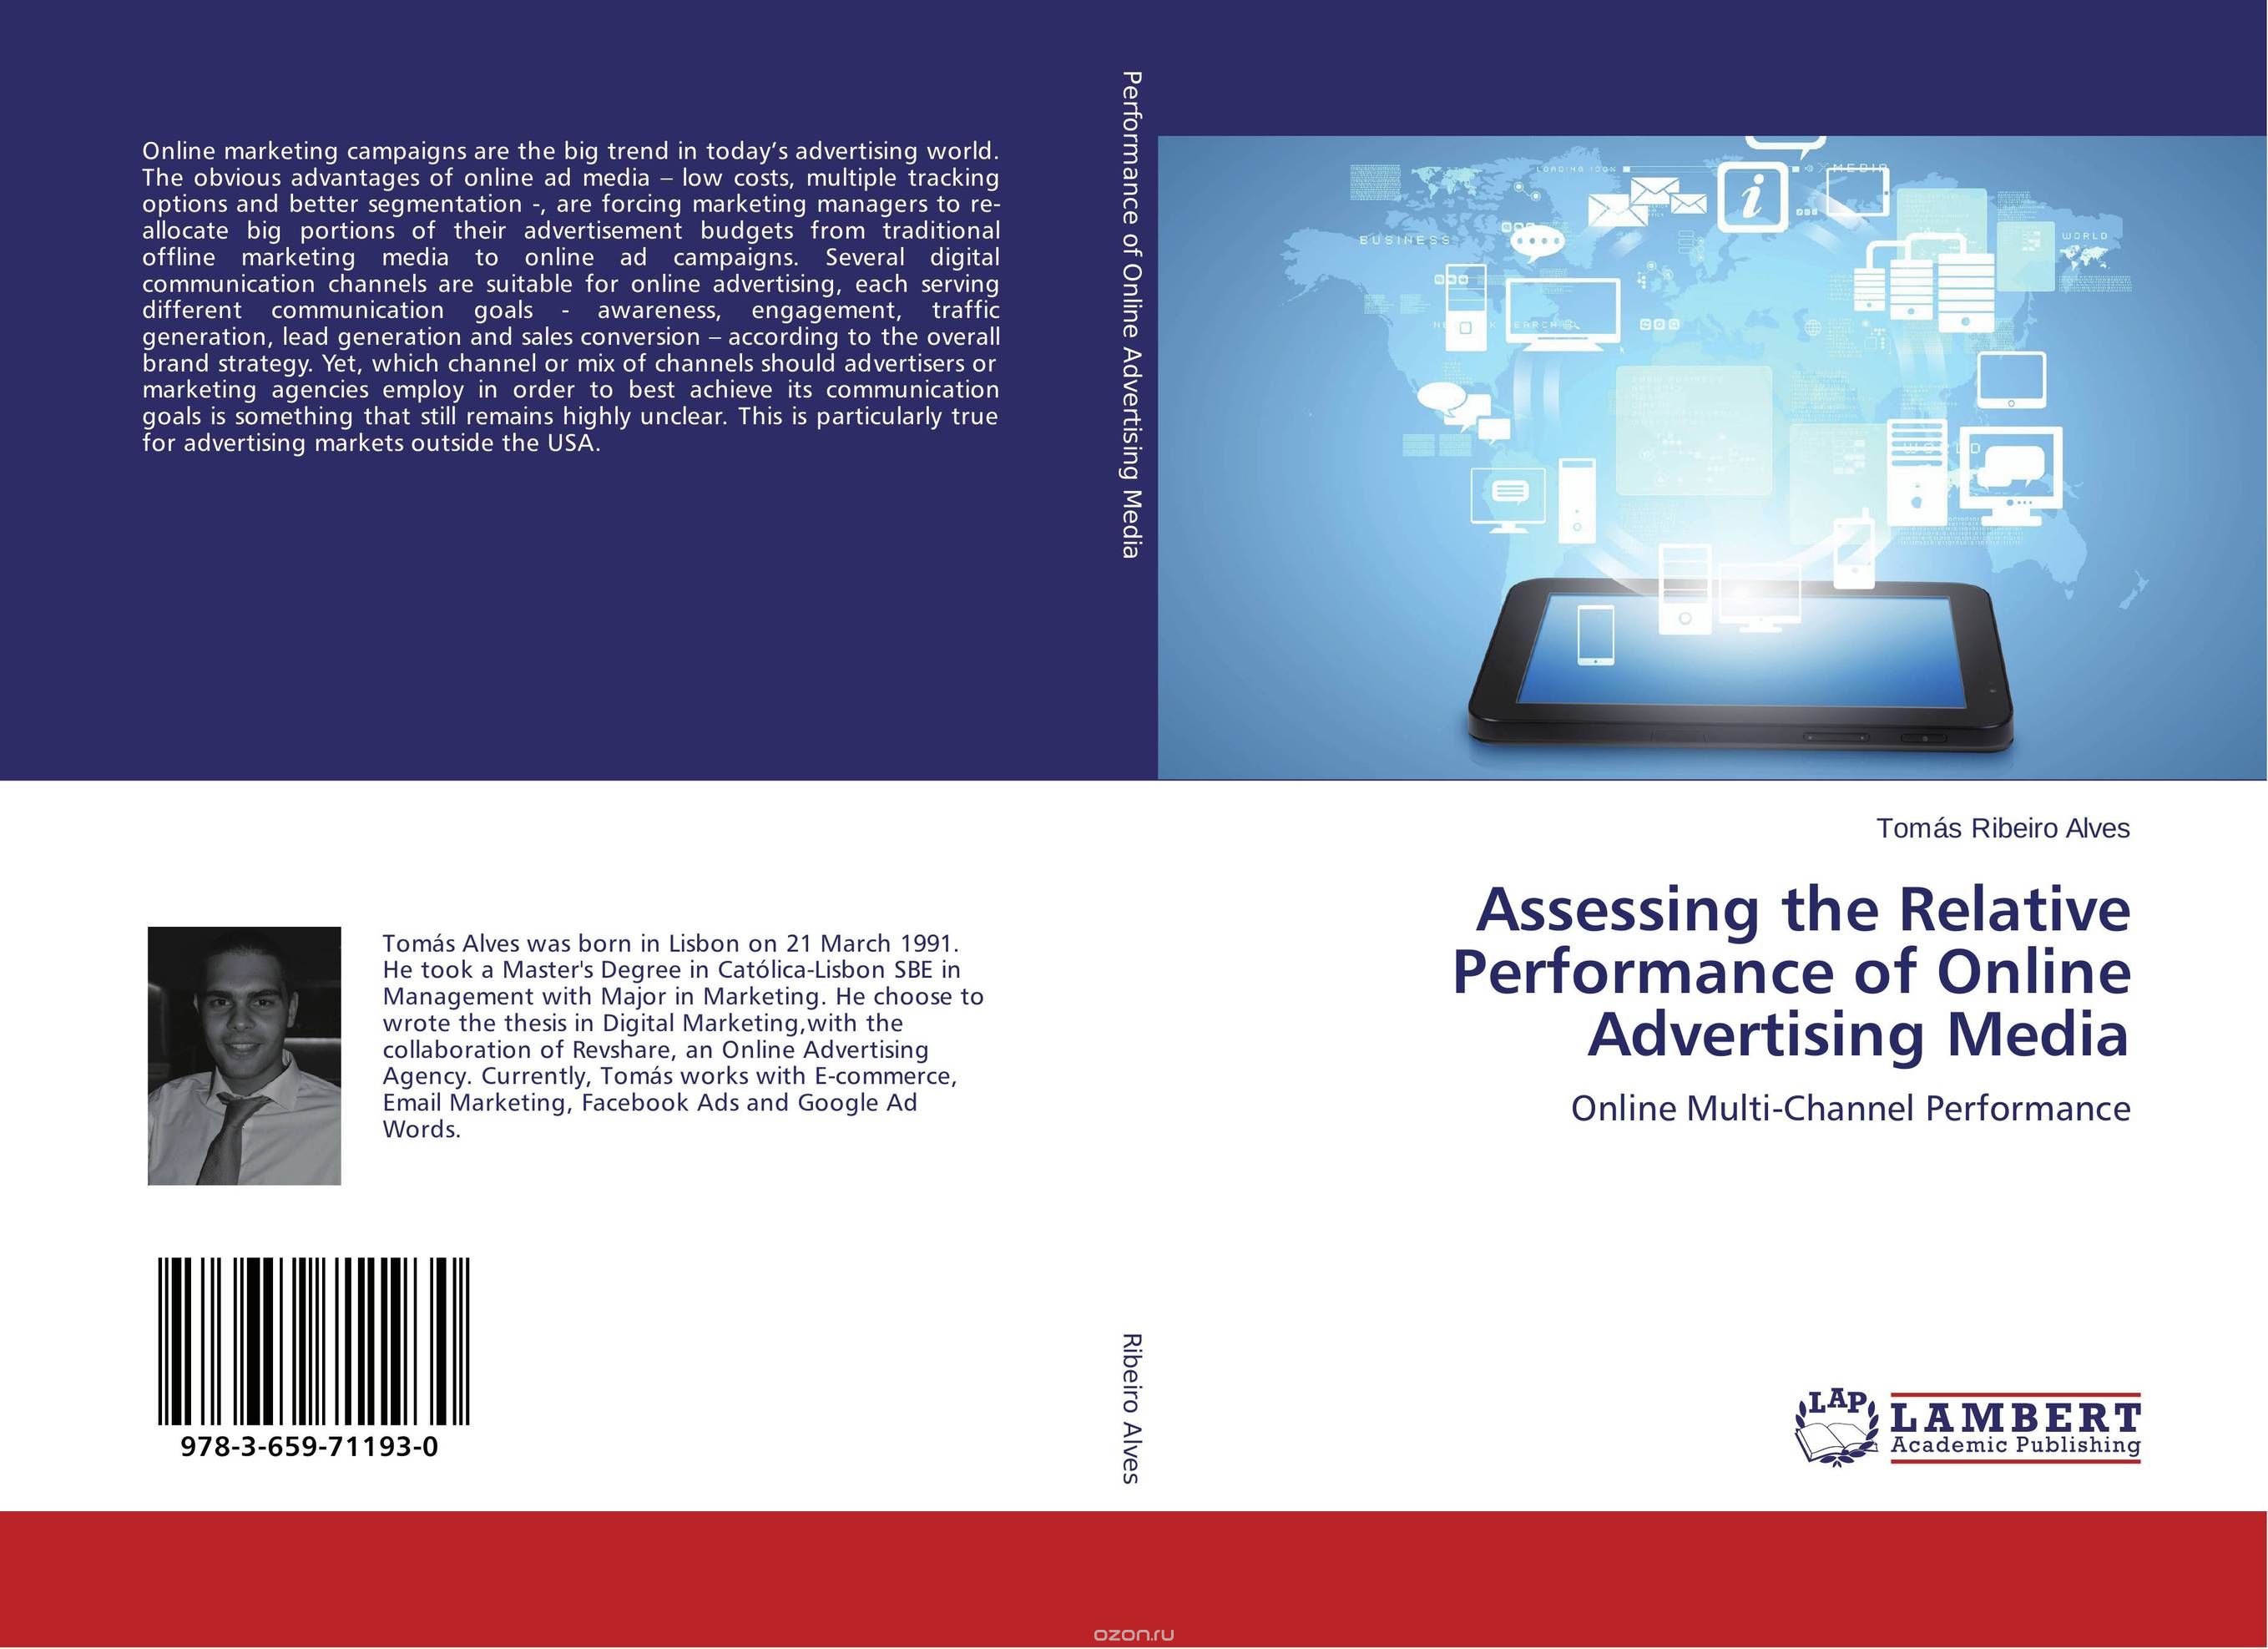 Assessing the Relative Performance of Online Advertising Media